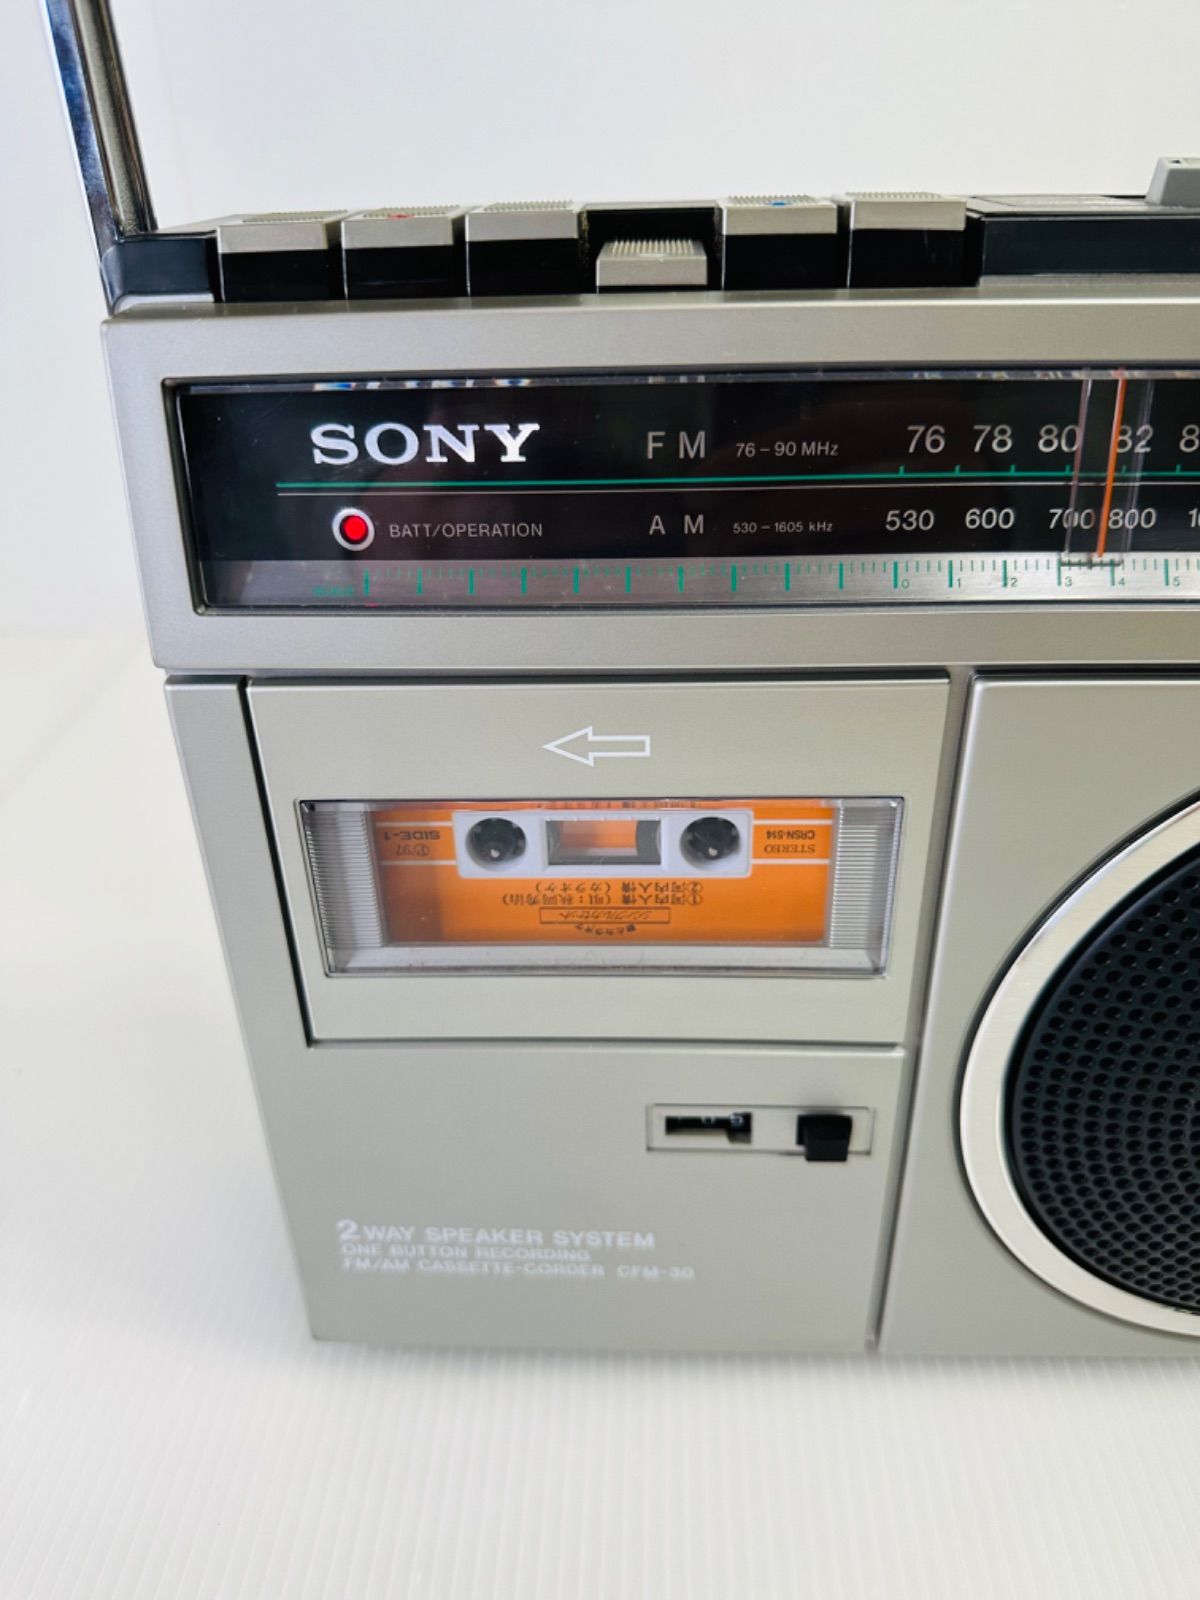 SONY CFM-10 ラジカセ レトロ ラジオ カセット FM - ラジオ